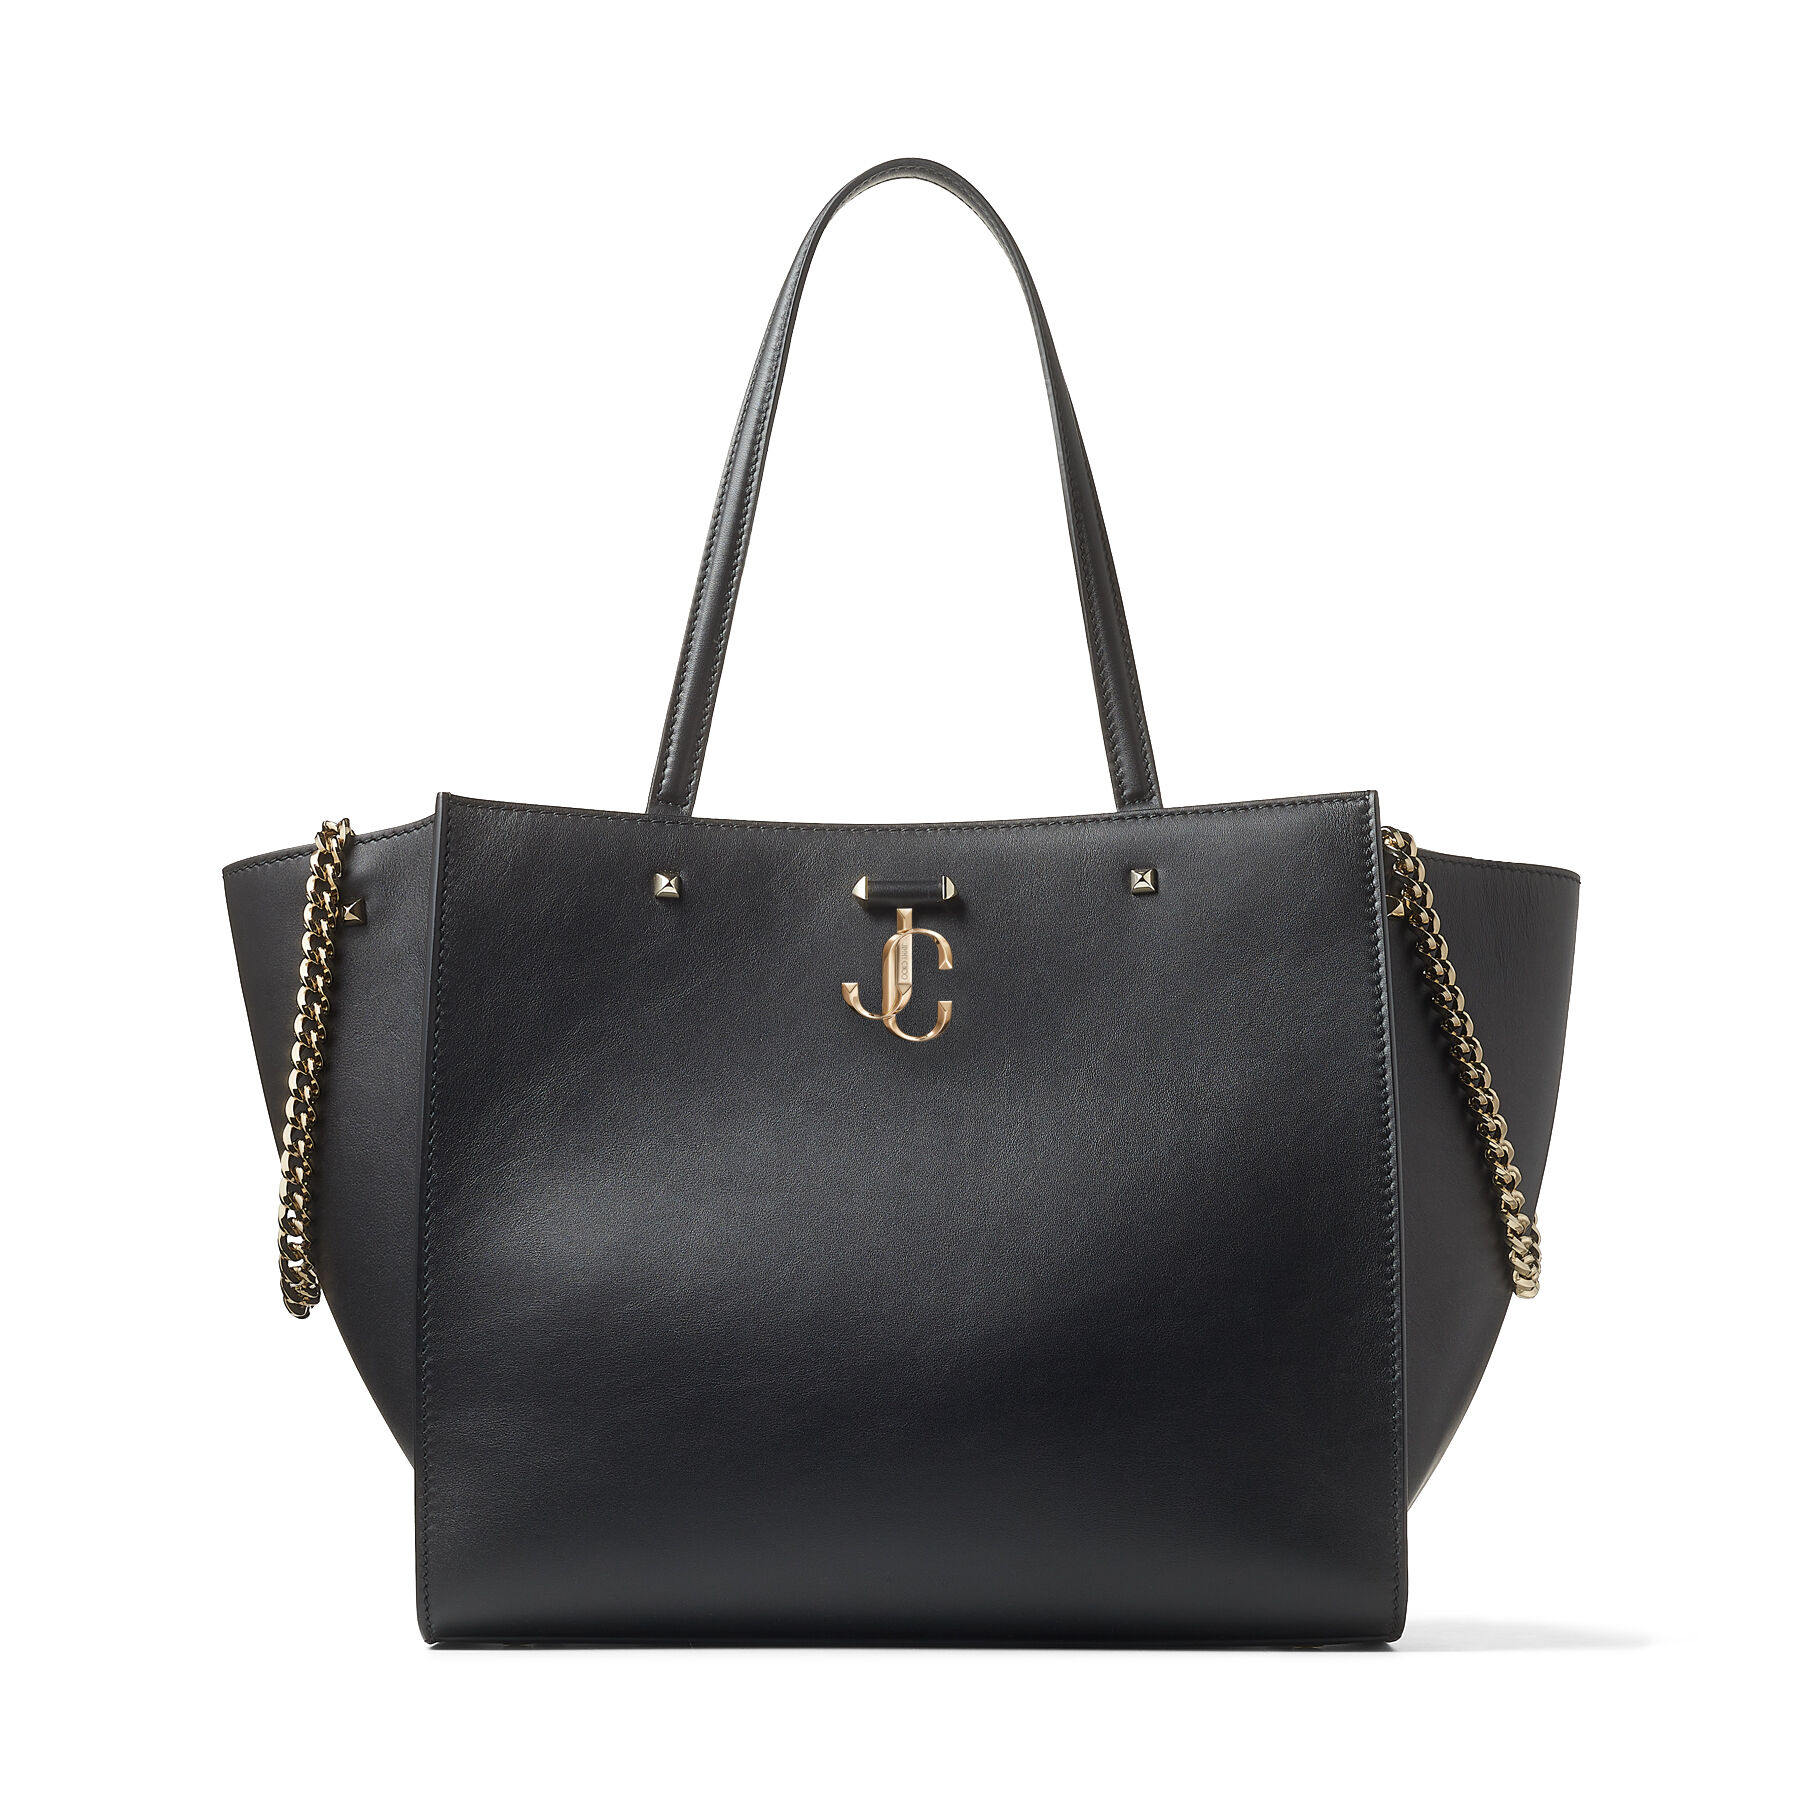 Black Fine Shiny Calf Leather Tote Bag with Light Gold JC Emblem 